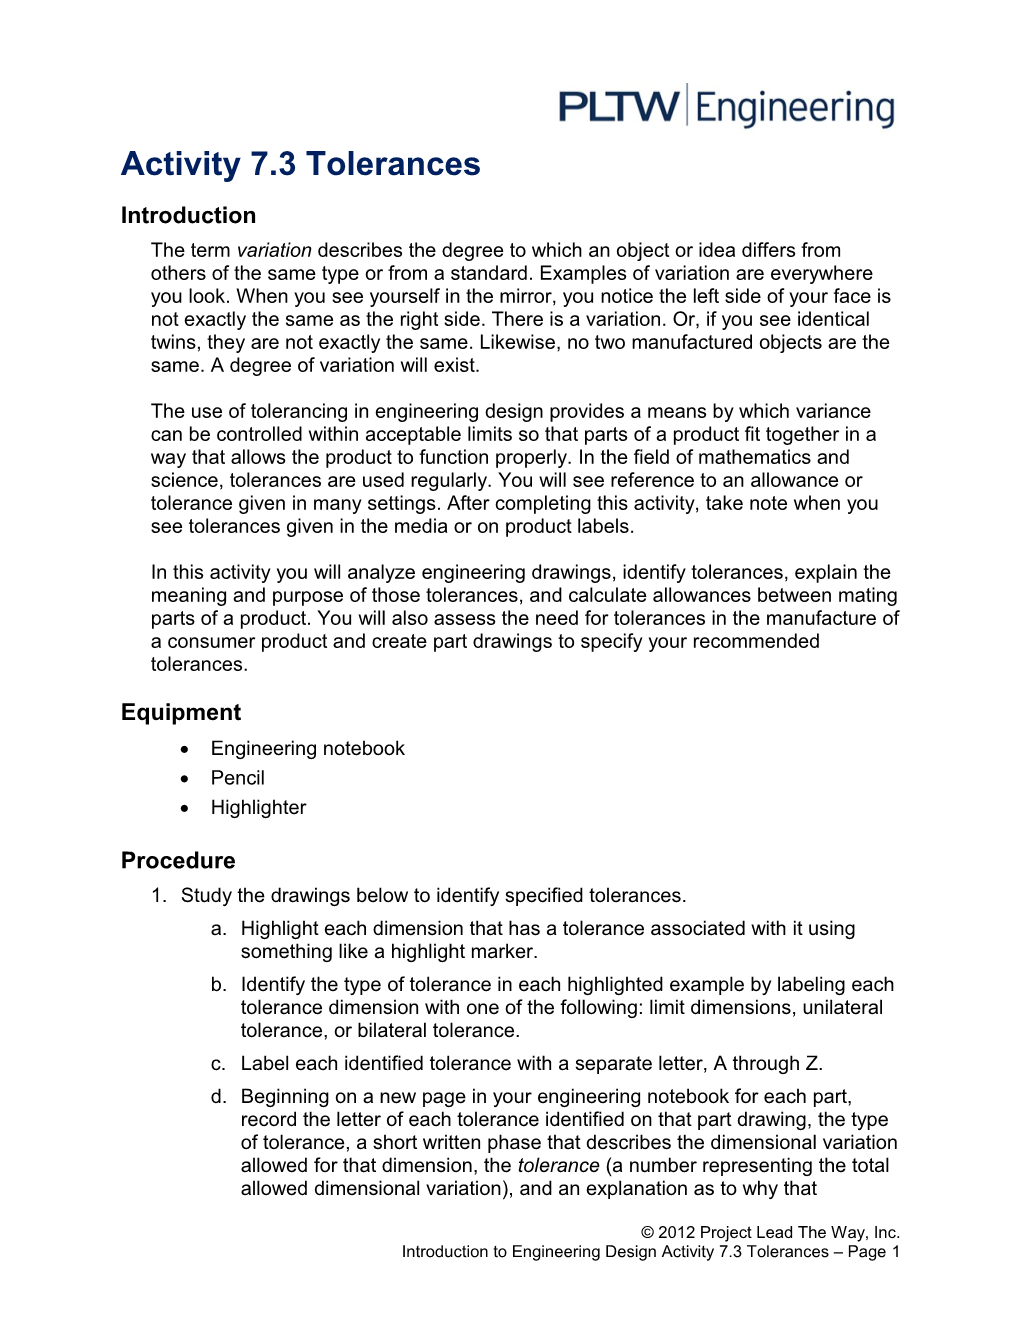 Activity 7.3 Tolerances